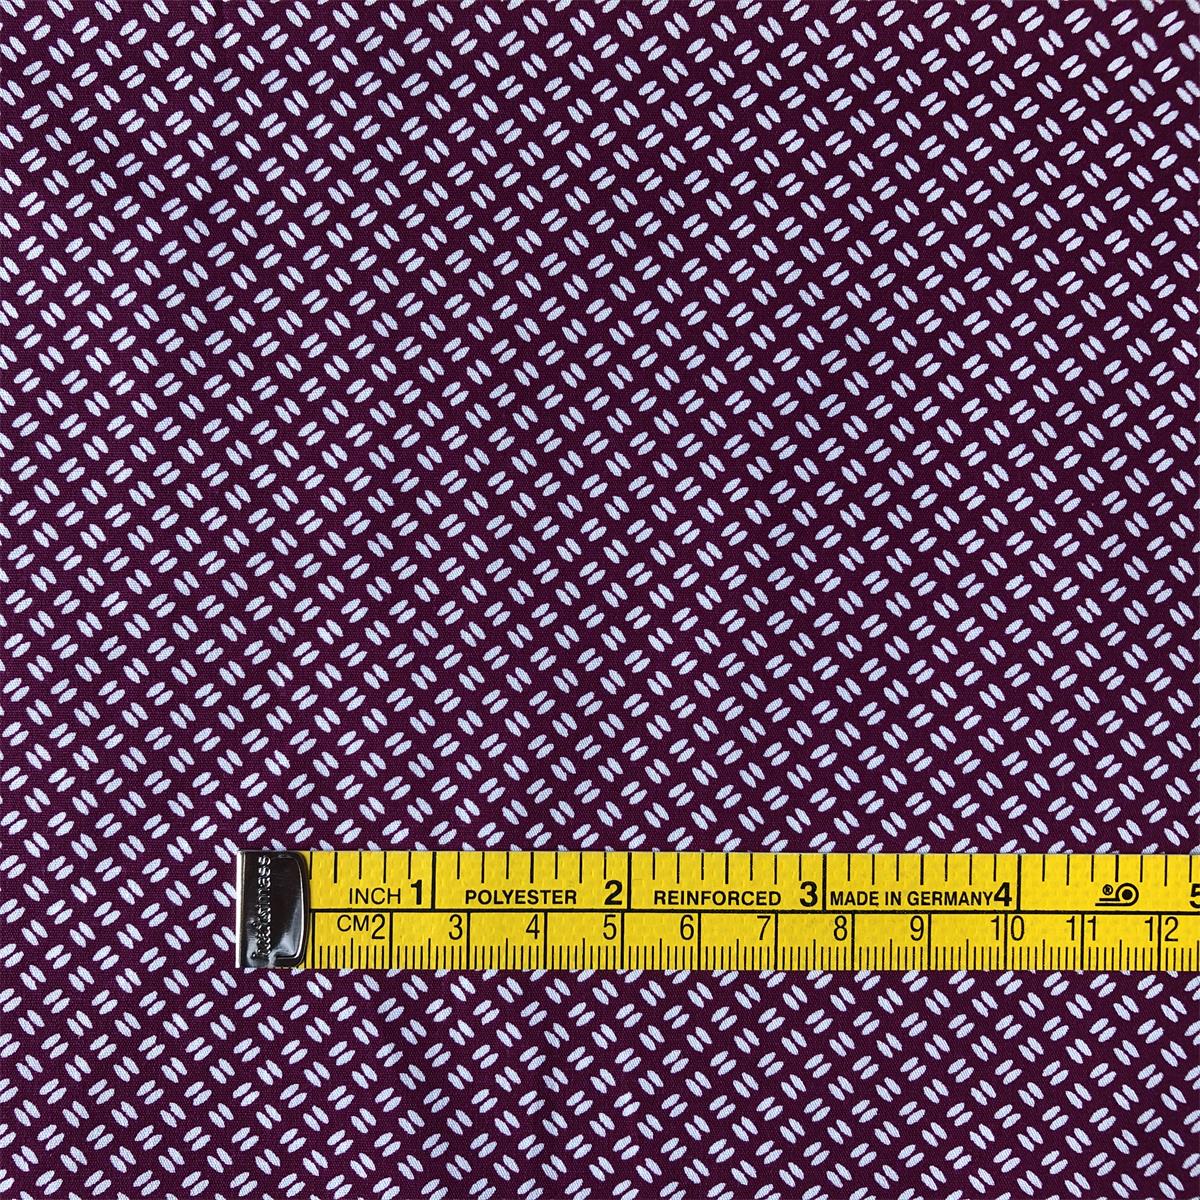 Sun-rising Textile Cotton Printed fabric for men's shirts 100%cotton poplin printed shirts woven fabric soft comfortable